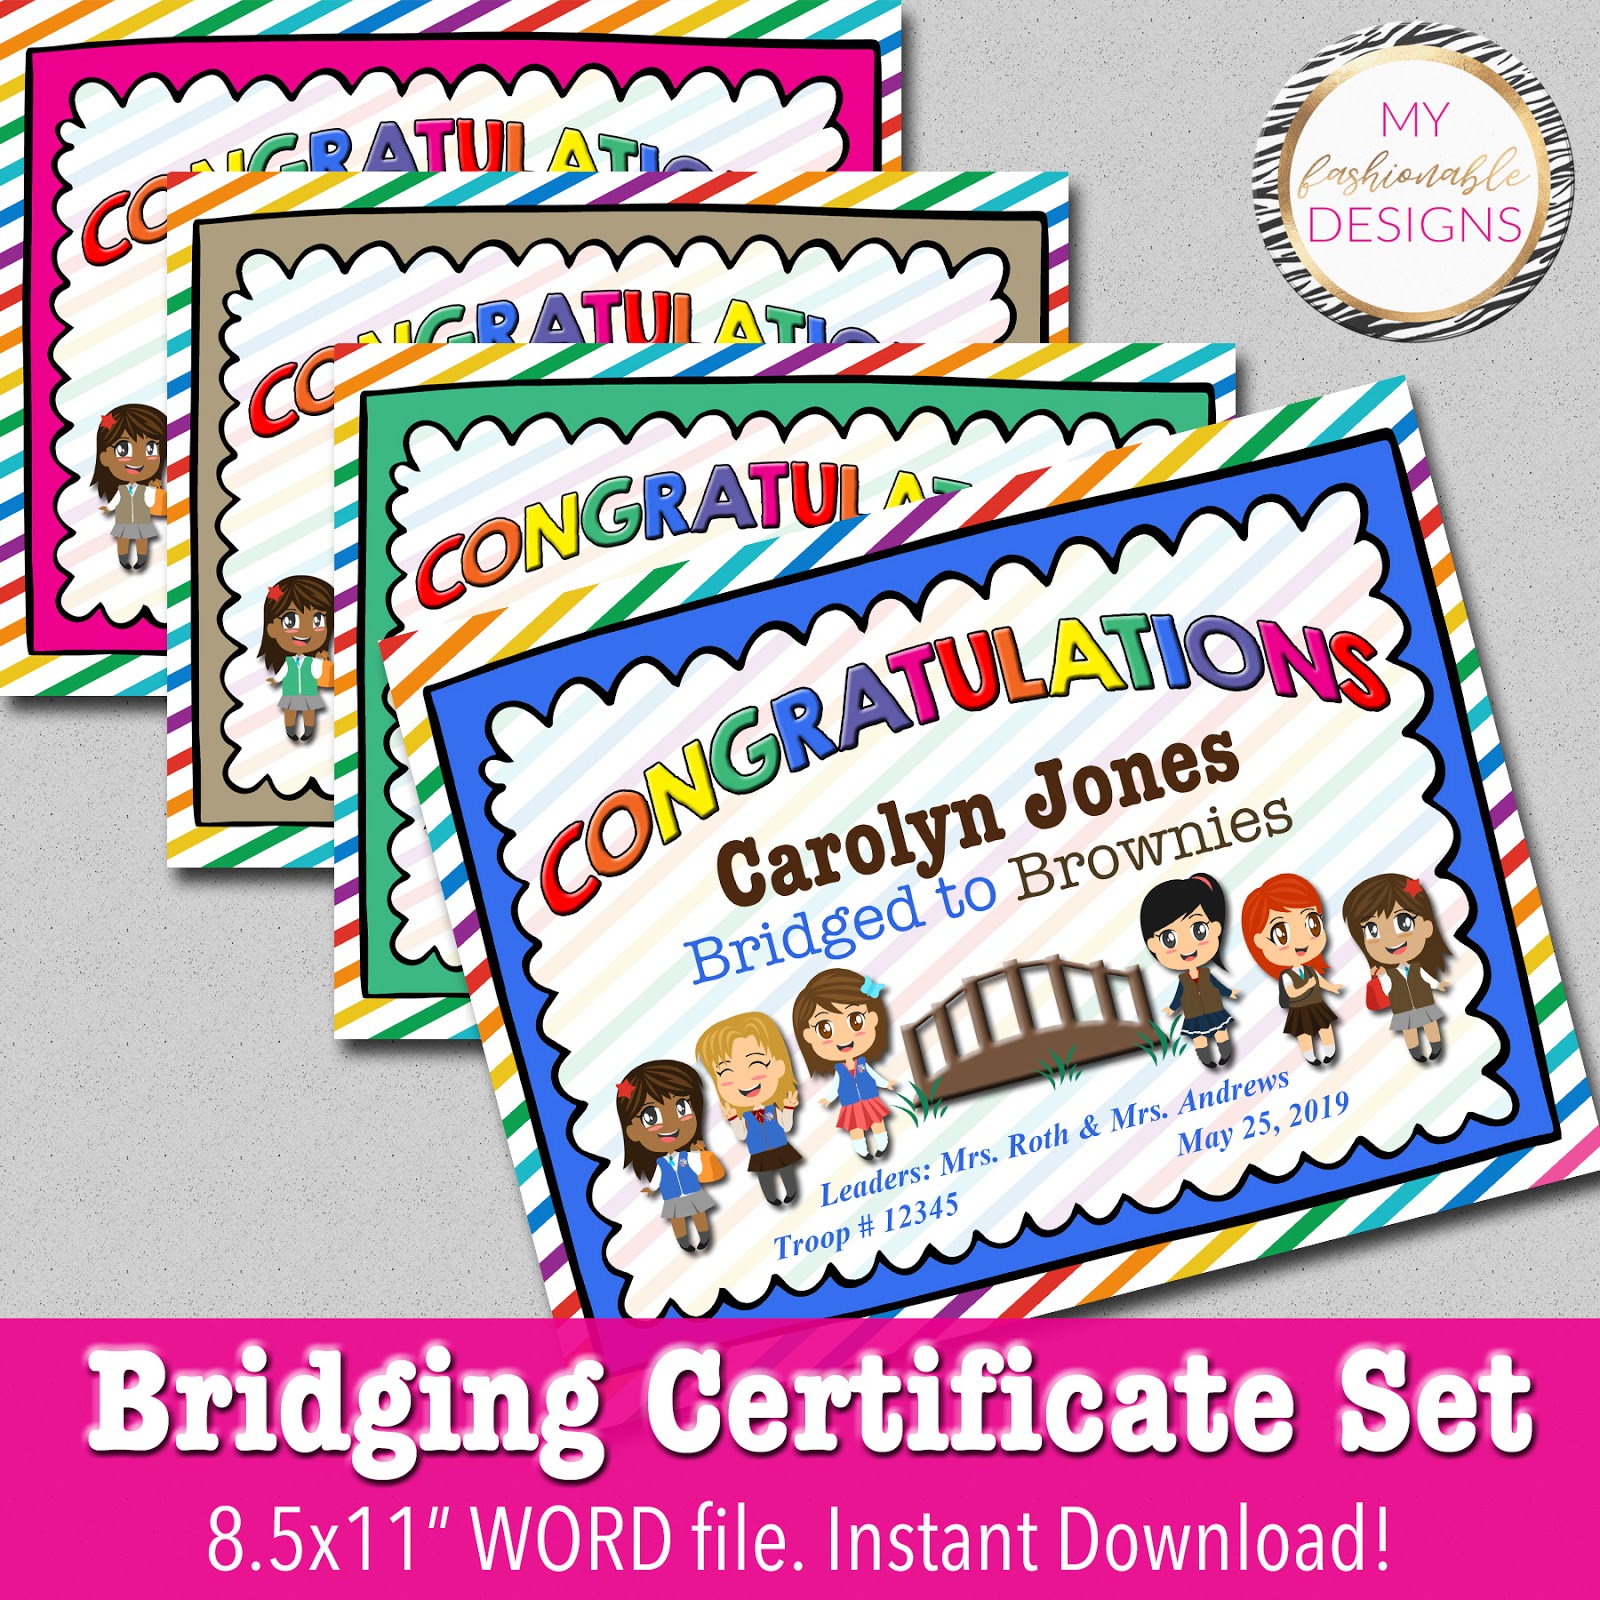 My Fashionable Designs Free Printable Bridging Certificates